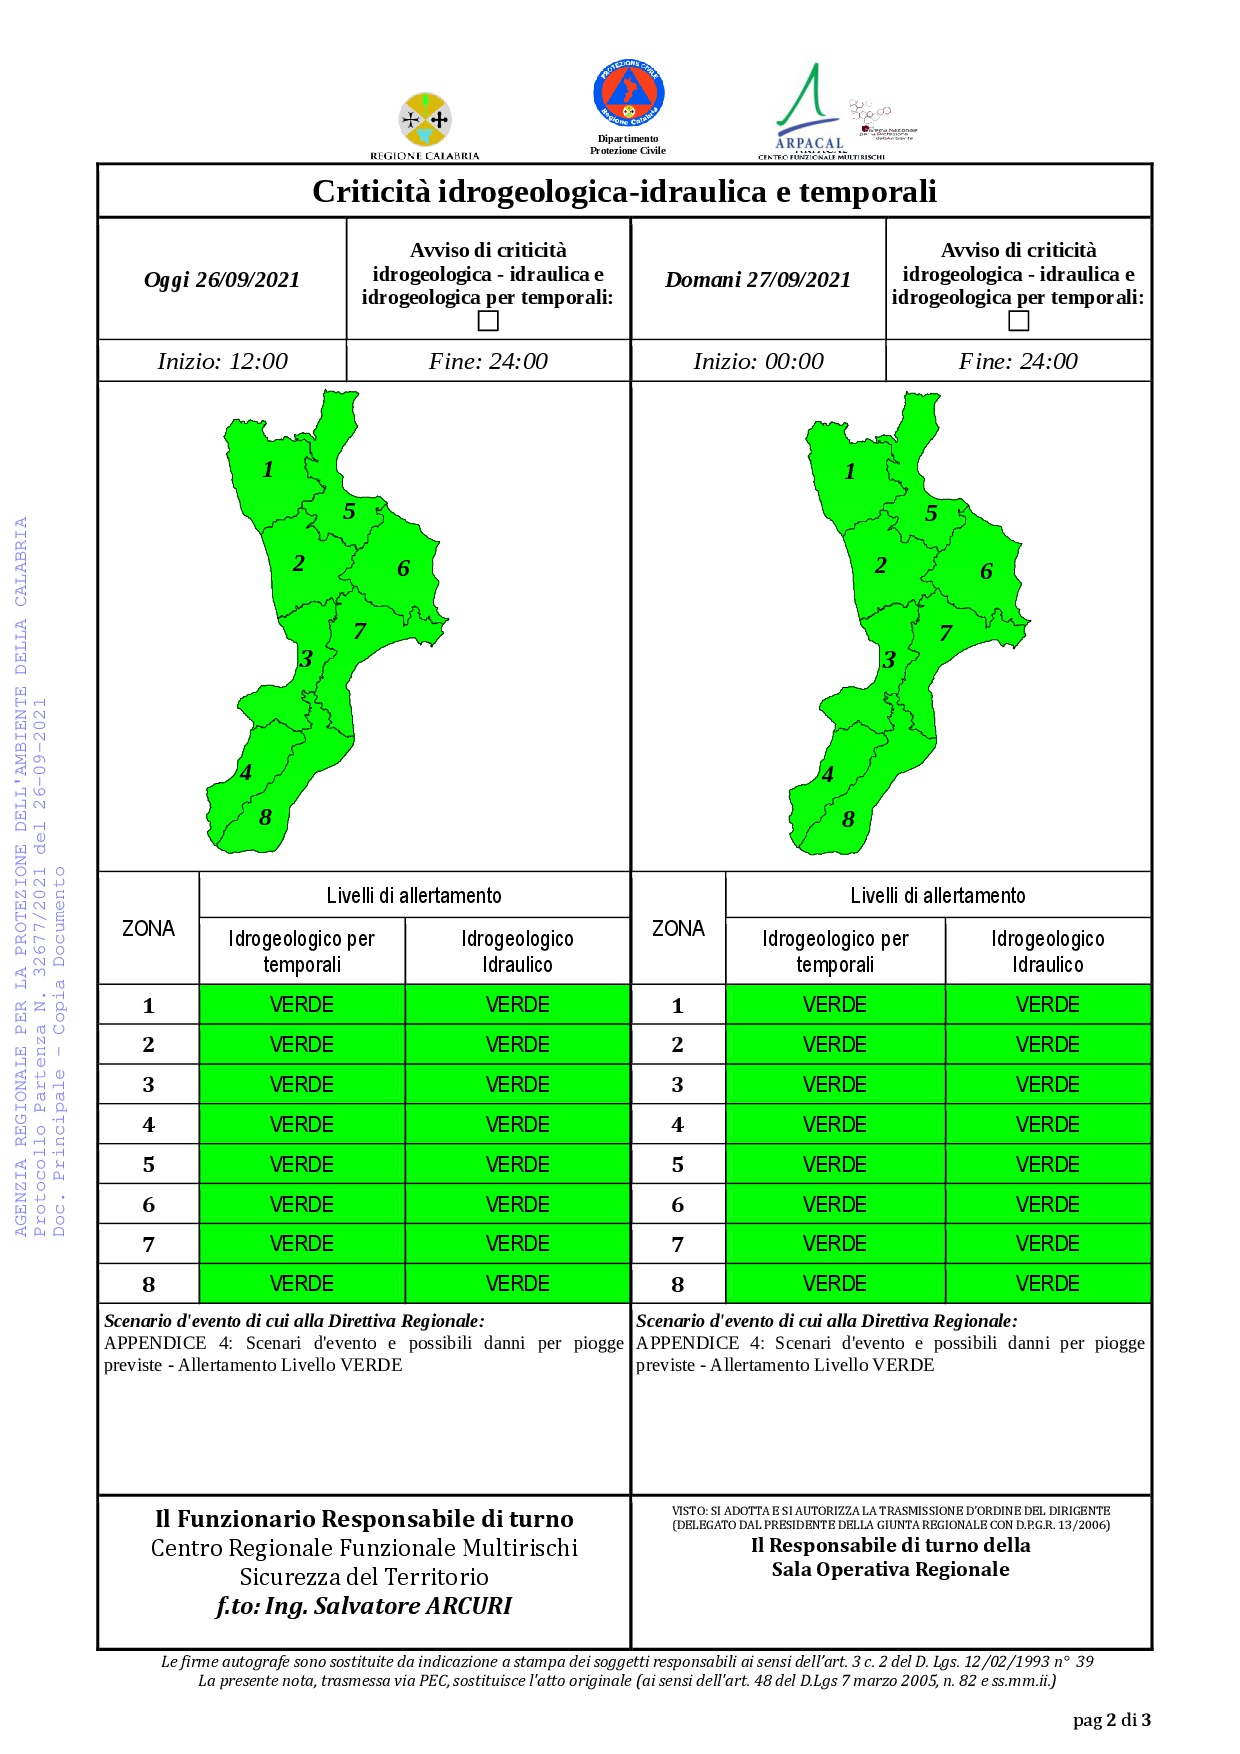 Criticità idrogeologica-idraulica e temporali in Calabria 26-09-2021